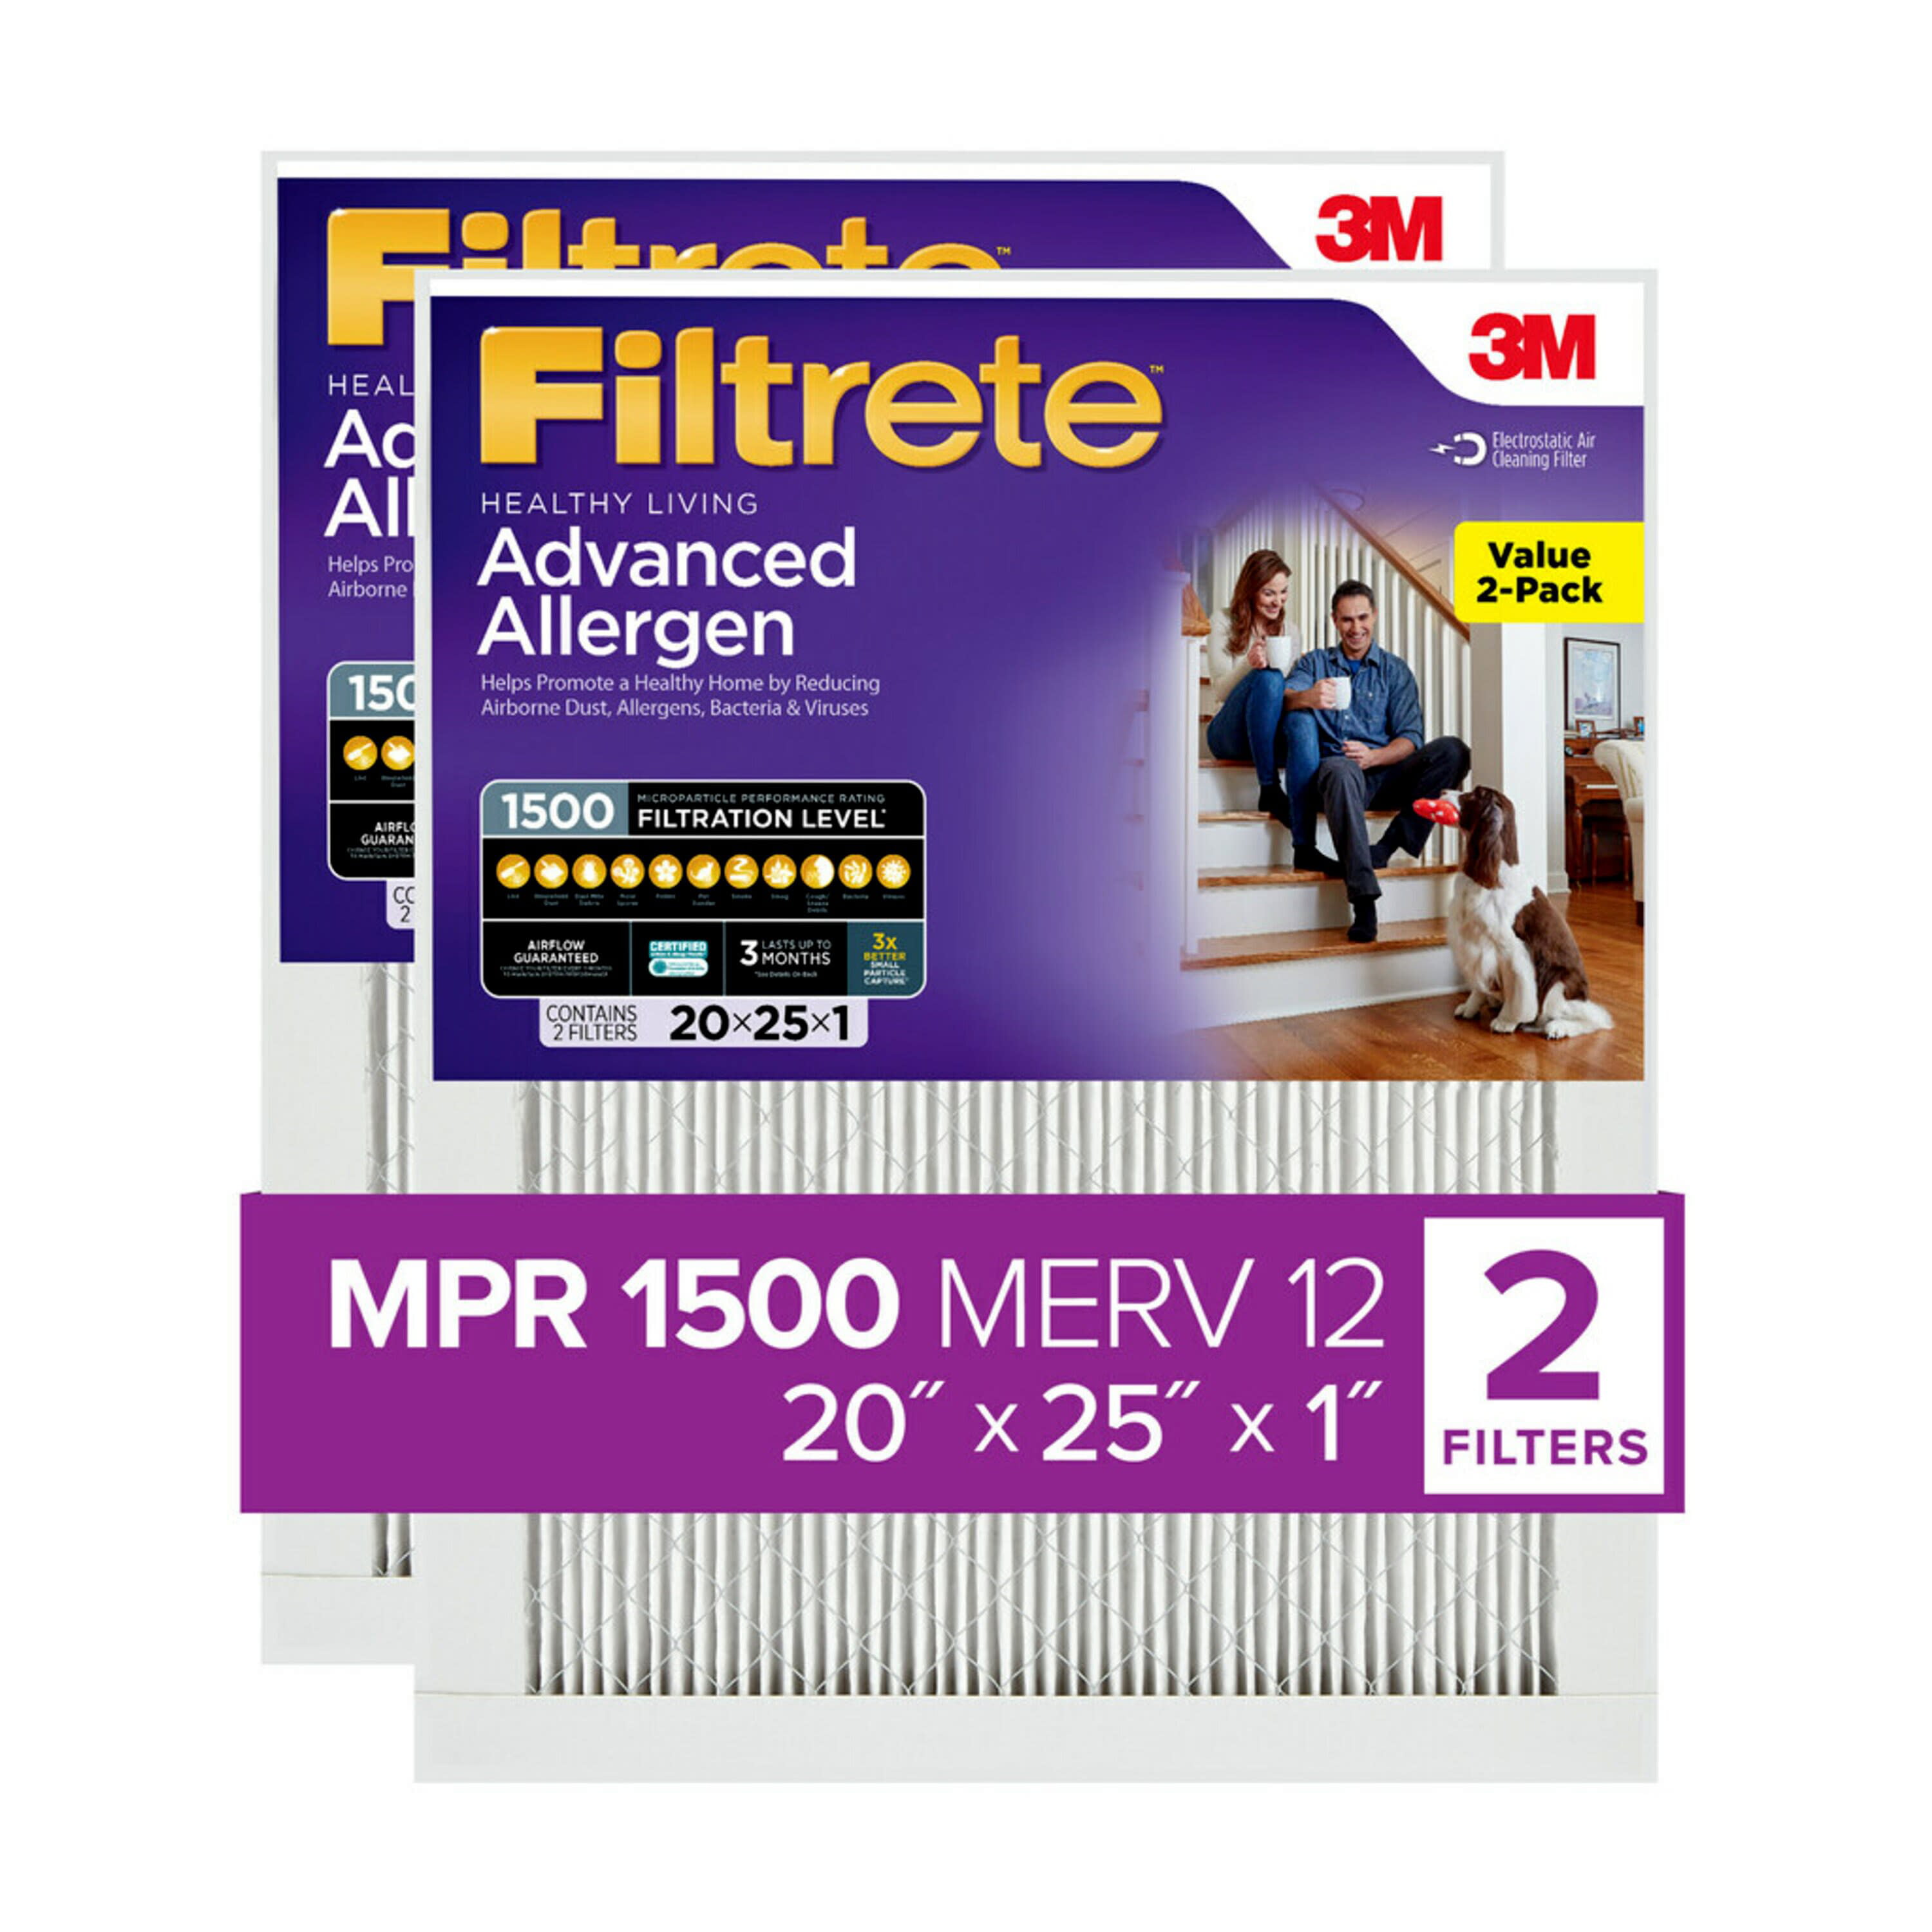 filtrete-20x25x1-healthy-living-advanced-allergen-reduction-hvac